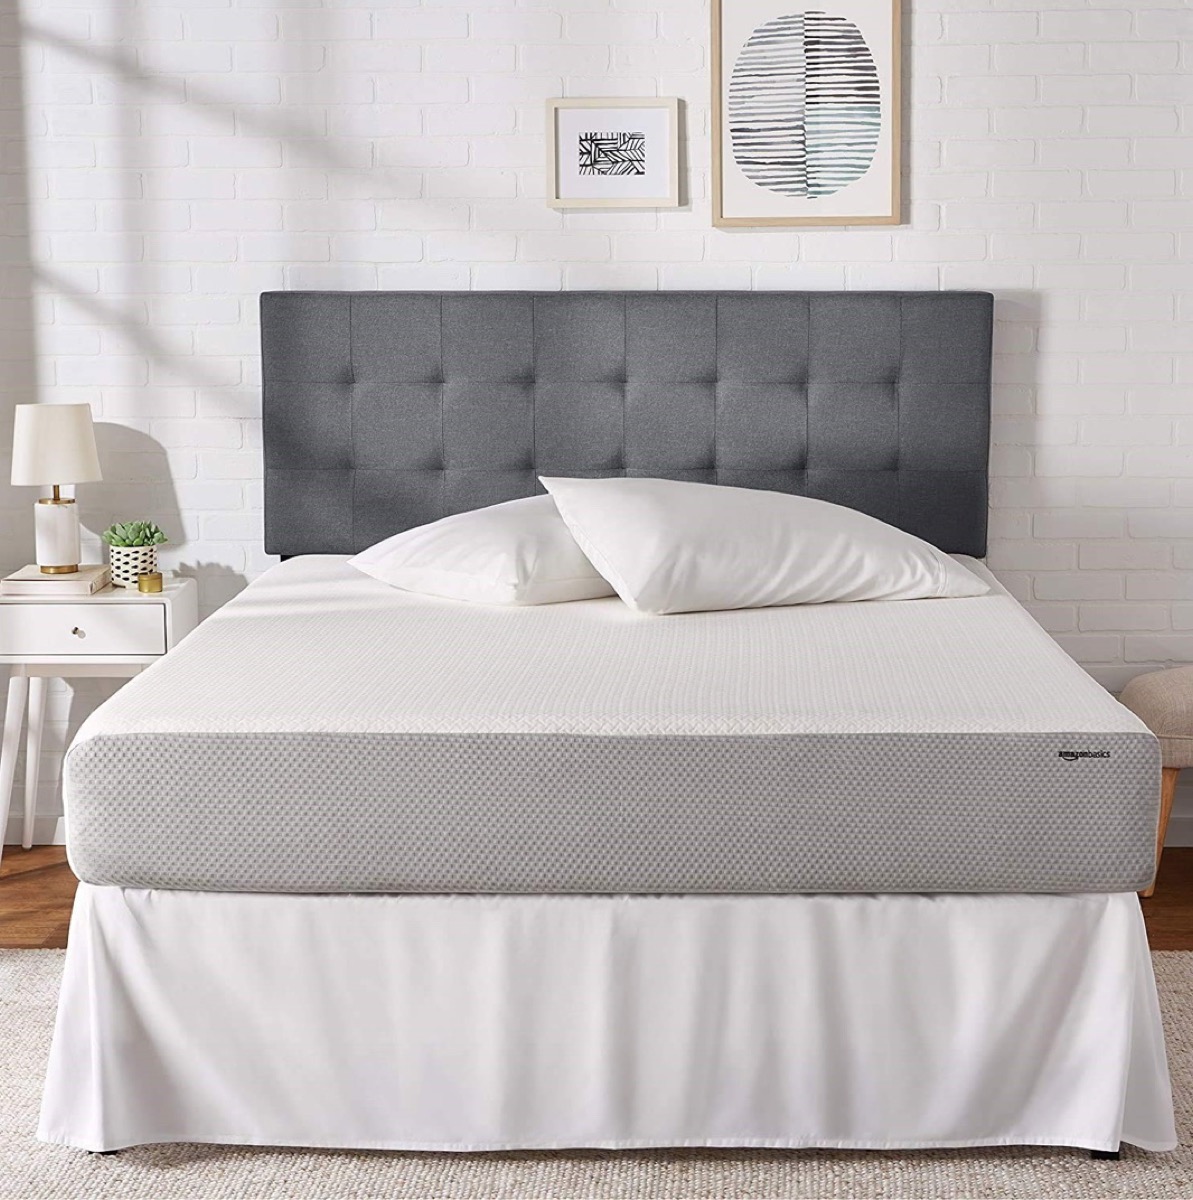 amazon basics mattress with white bedskirt against a gray headboard